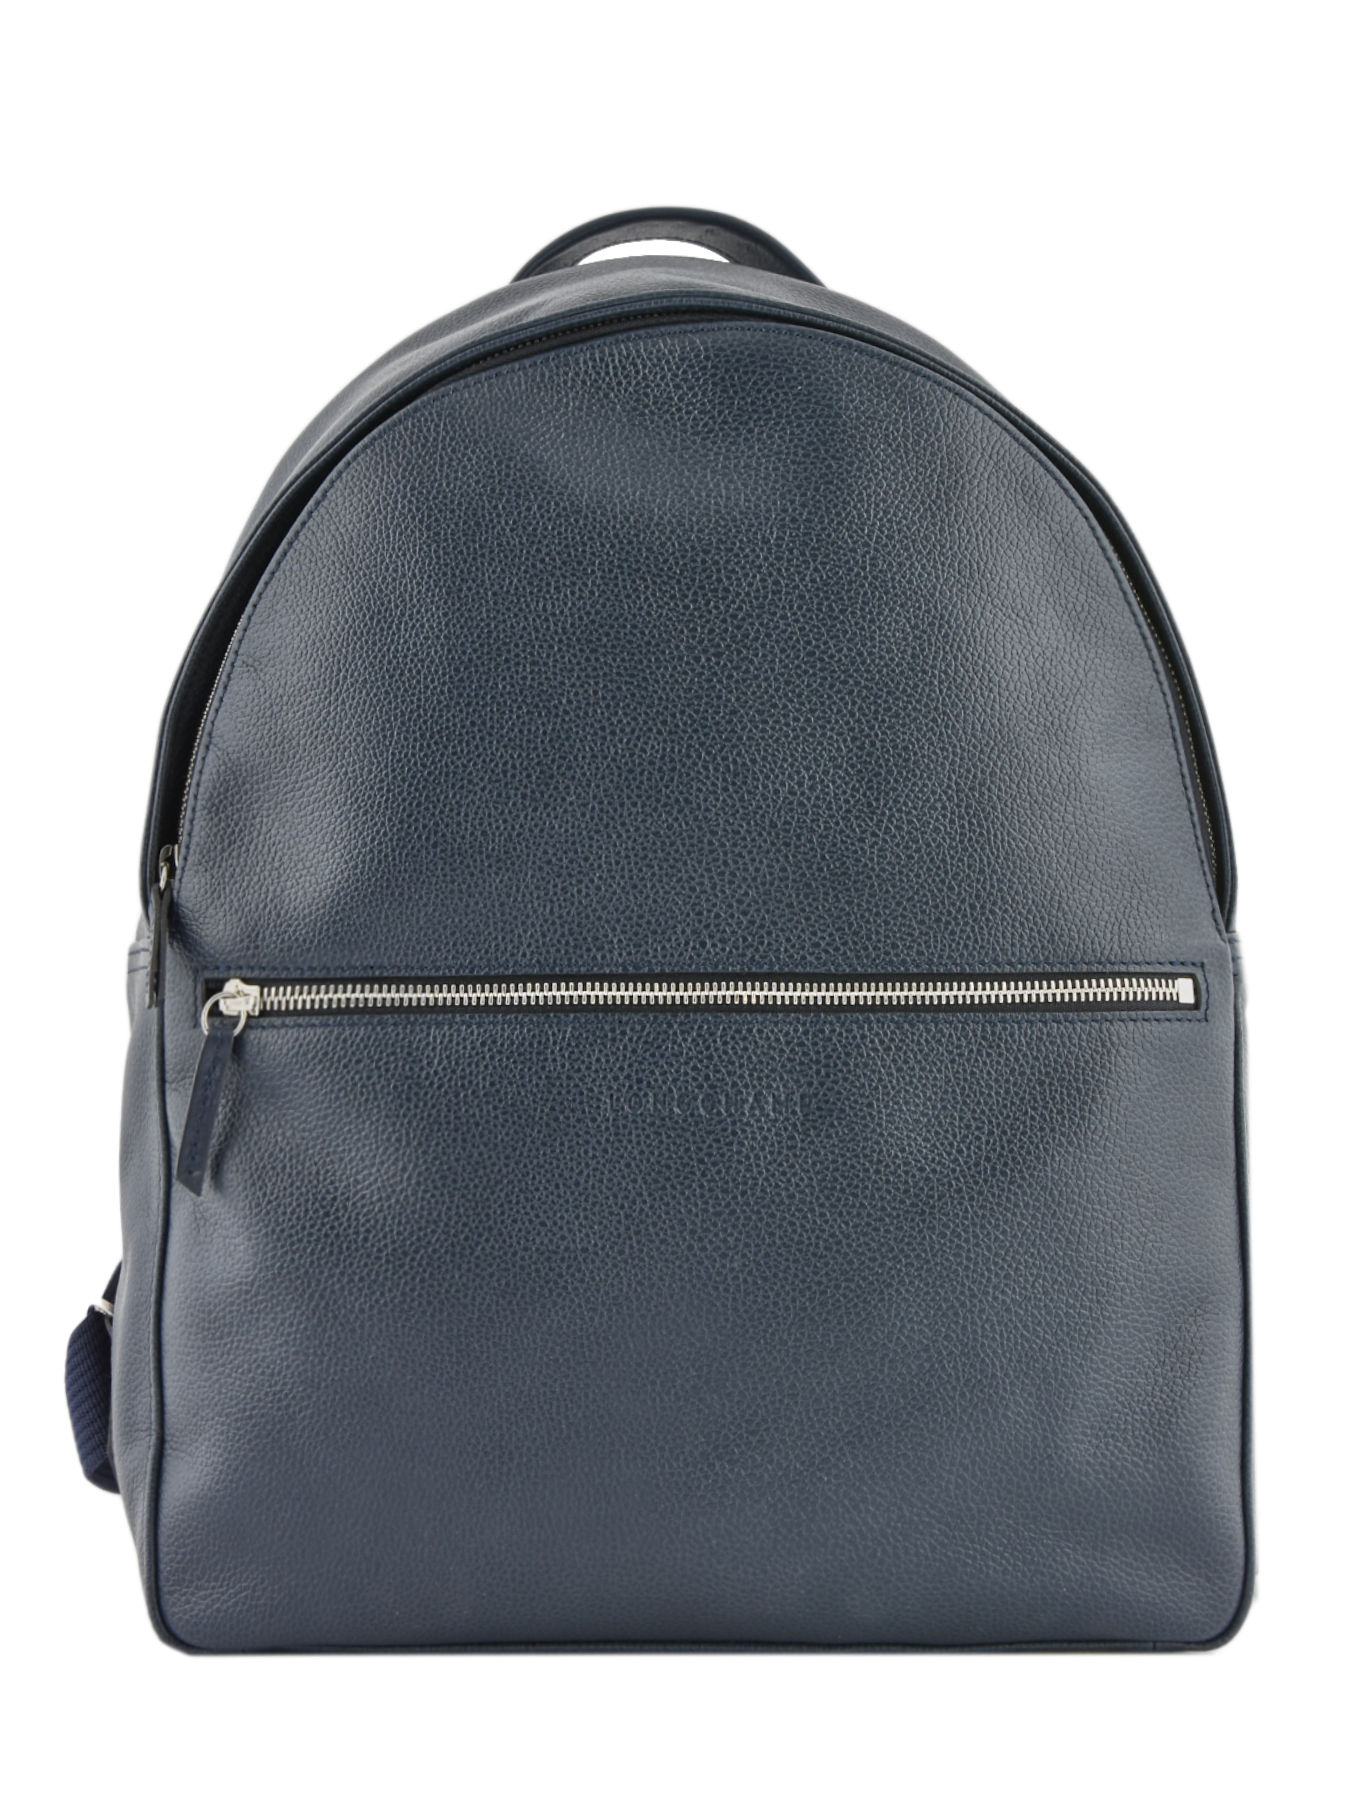 Le Foulonné Backpack Black - Leather (10195021001)